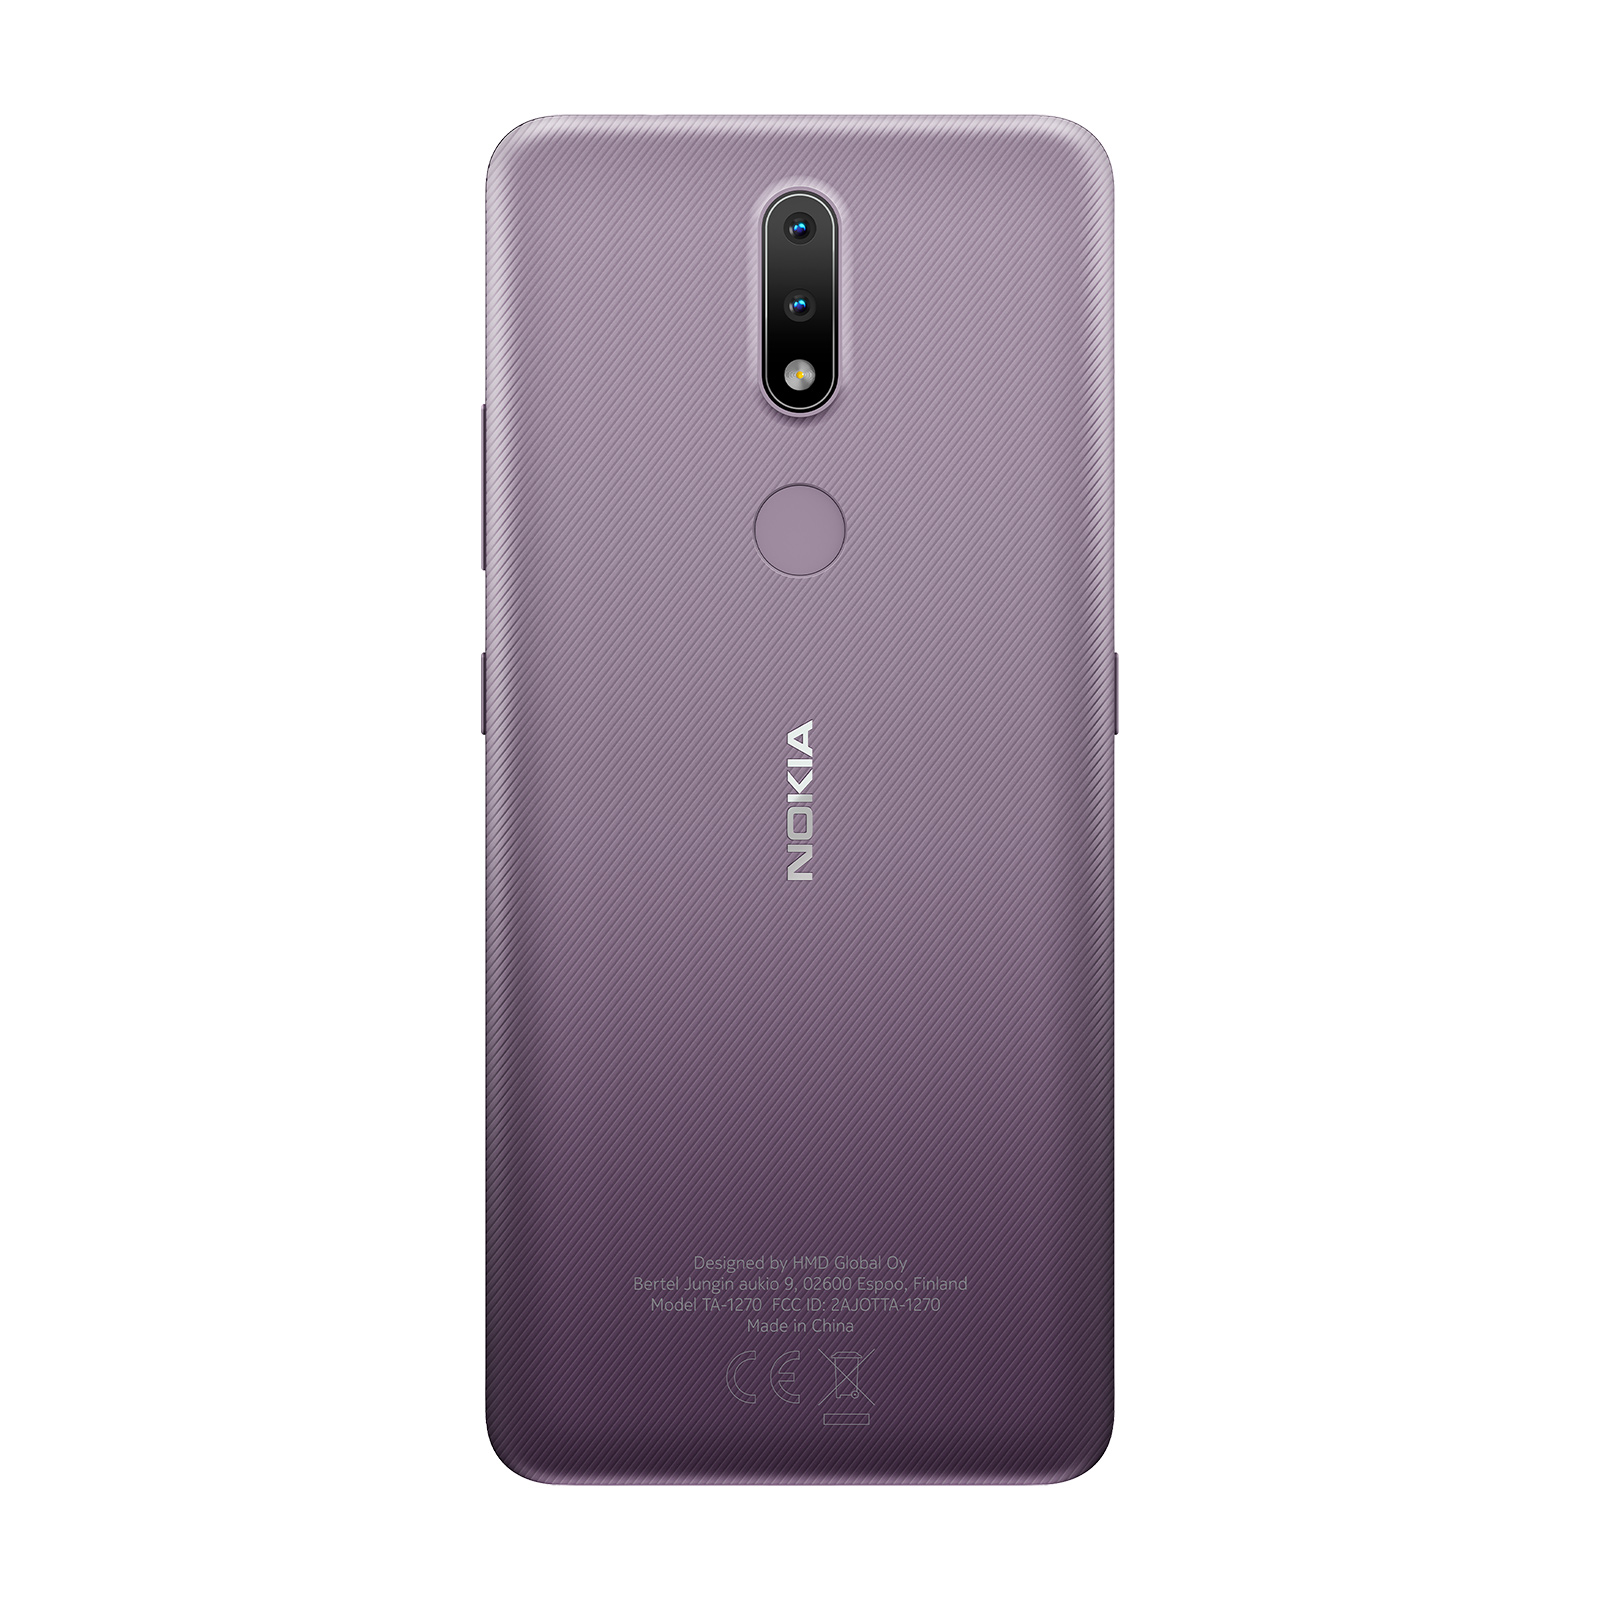 Nokia 2.4 smartphone